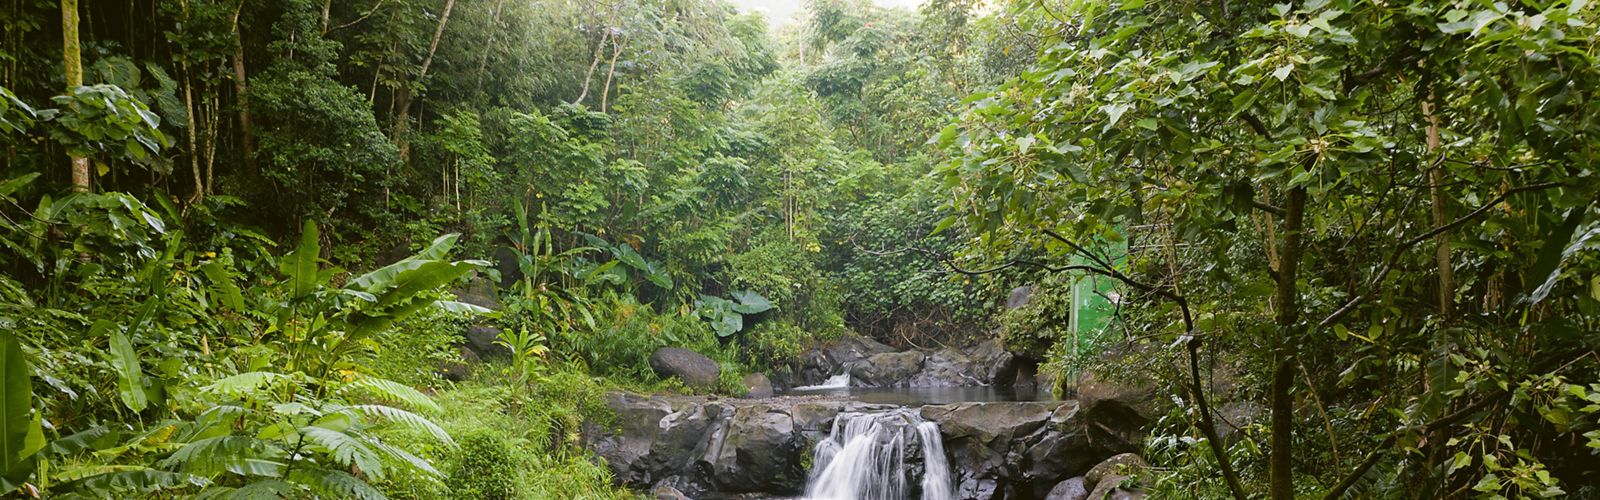 Waterfall in a lush forest on Papahana Kuaola property. The waterfall is part of He’eia stream that feeds the Papahana lo’i & goes down to Kako’o ‘Oiwi, ending at Paepae o He’eia fishpond.